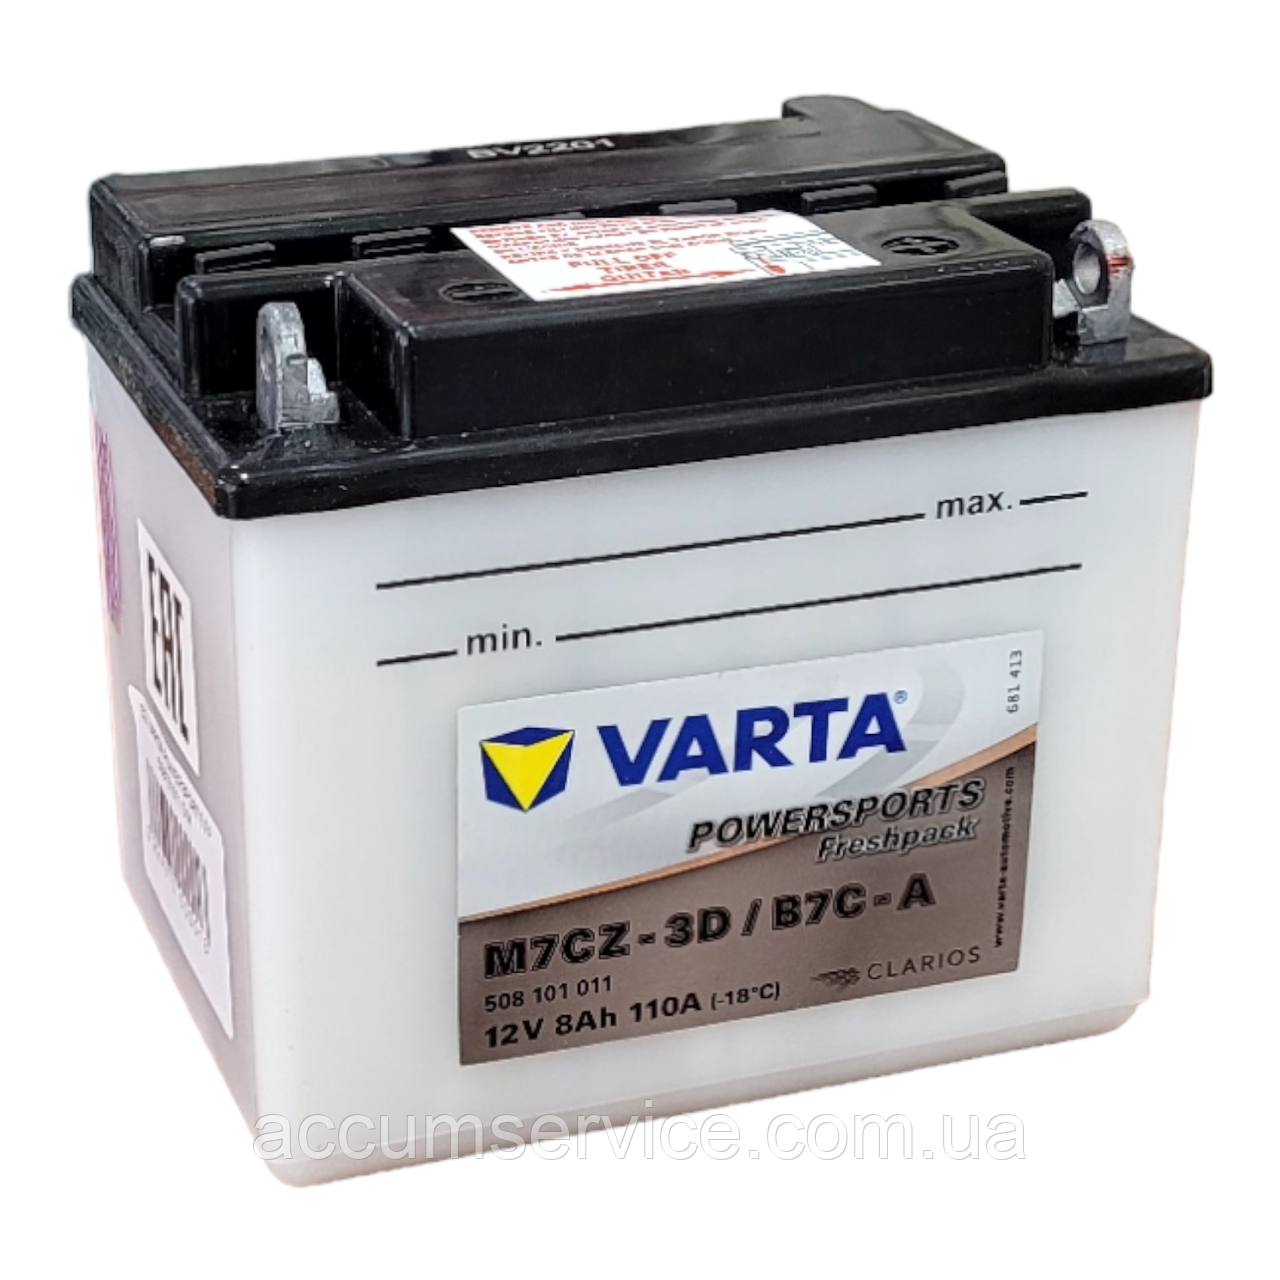 Акумулятор VARTA POWERSPORTS FP 508101011 I314